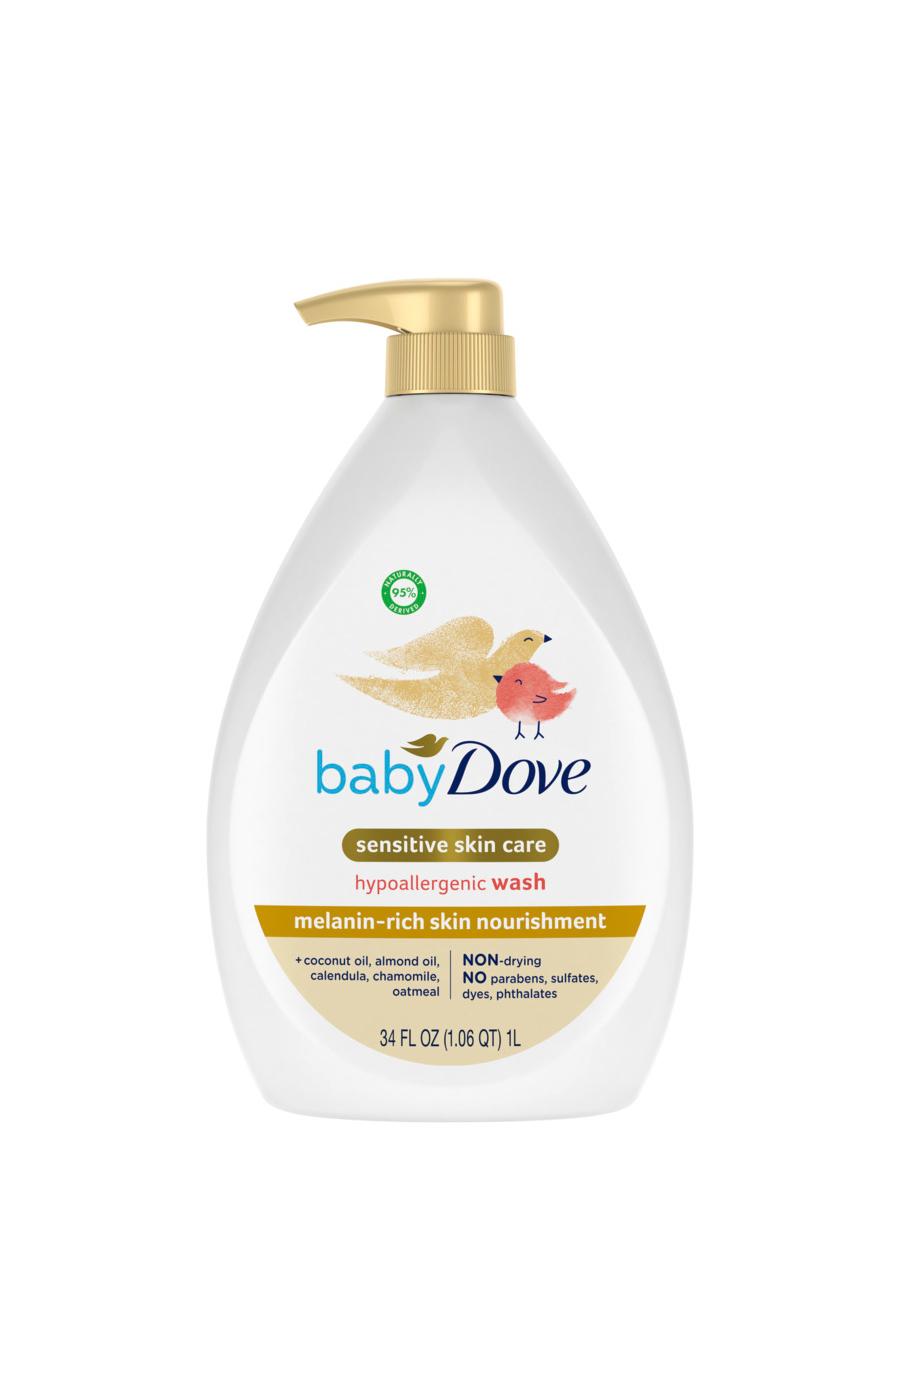 Baby Dove Sensitive Baby Wash for Melanin-rich Skin; image 1 of 6